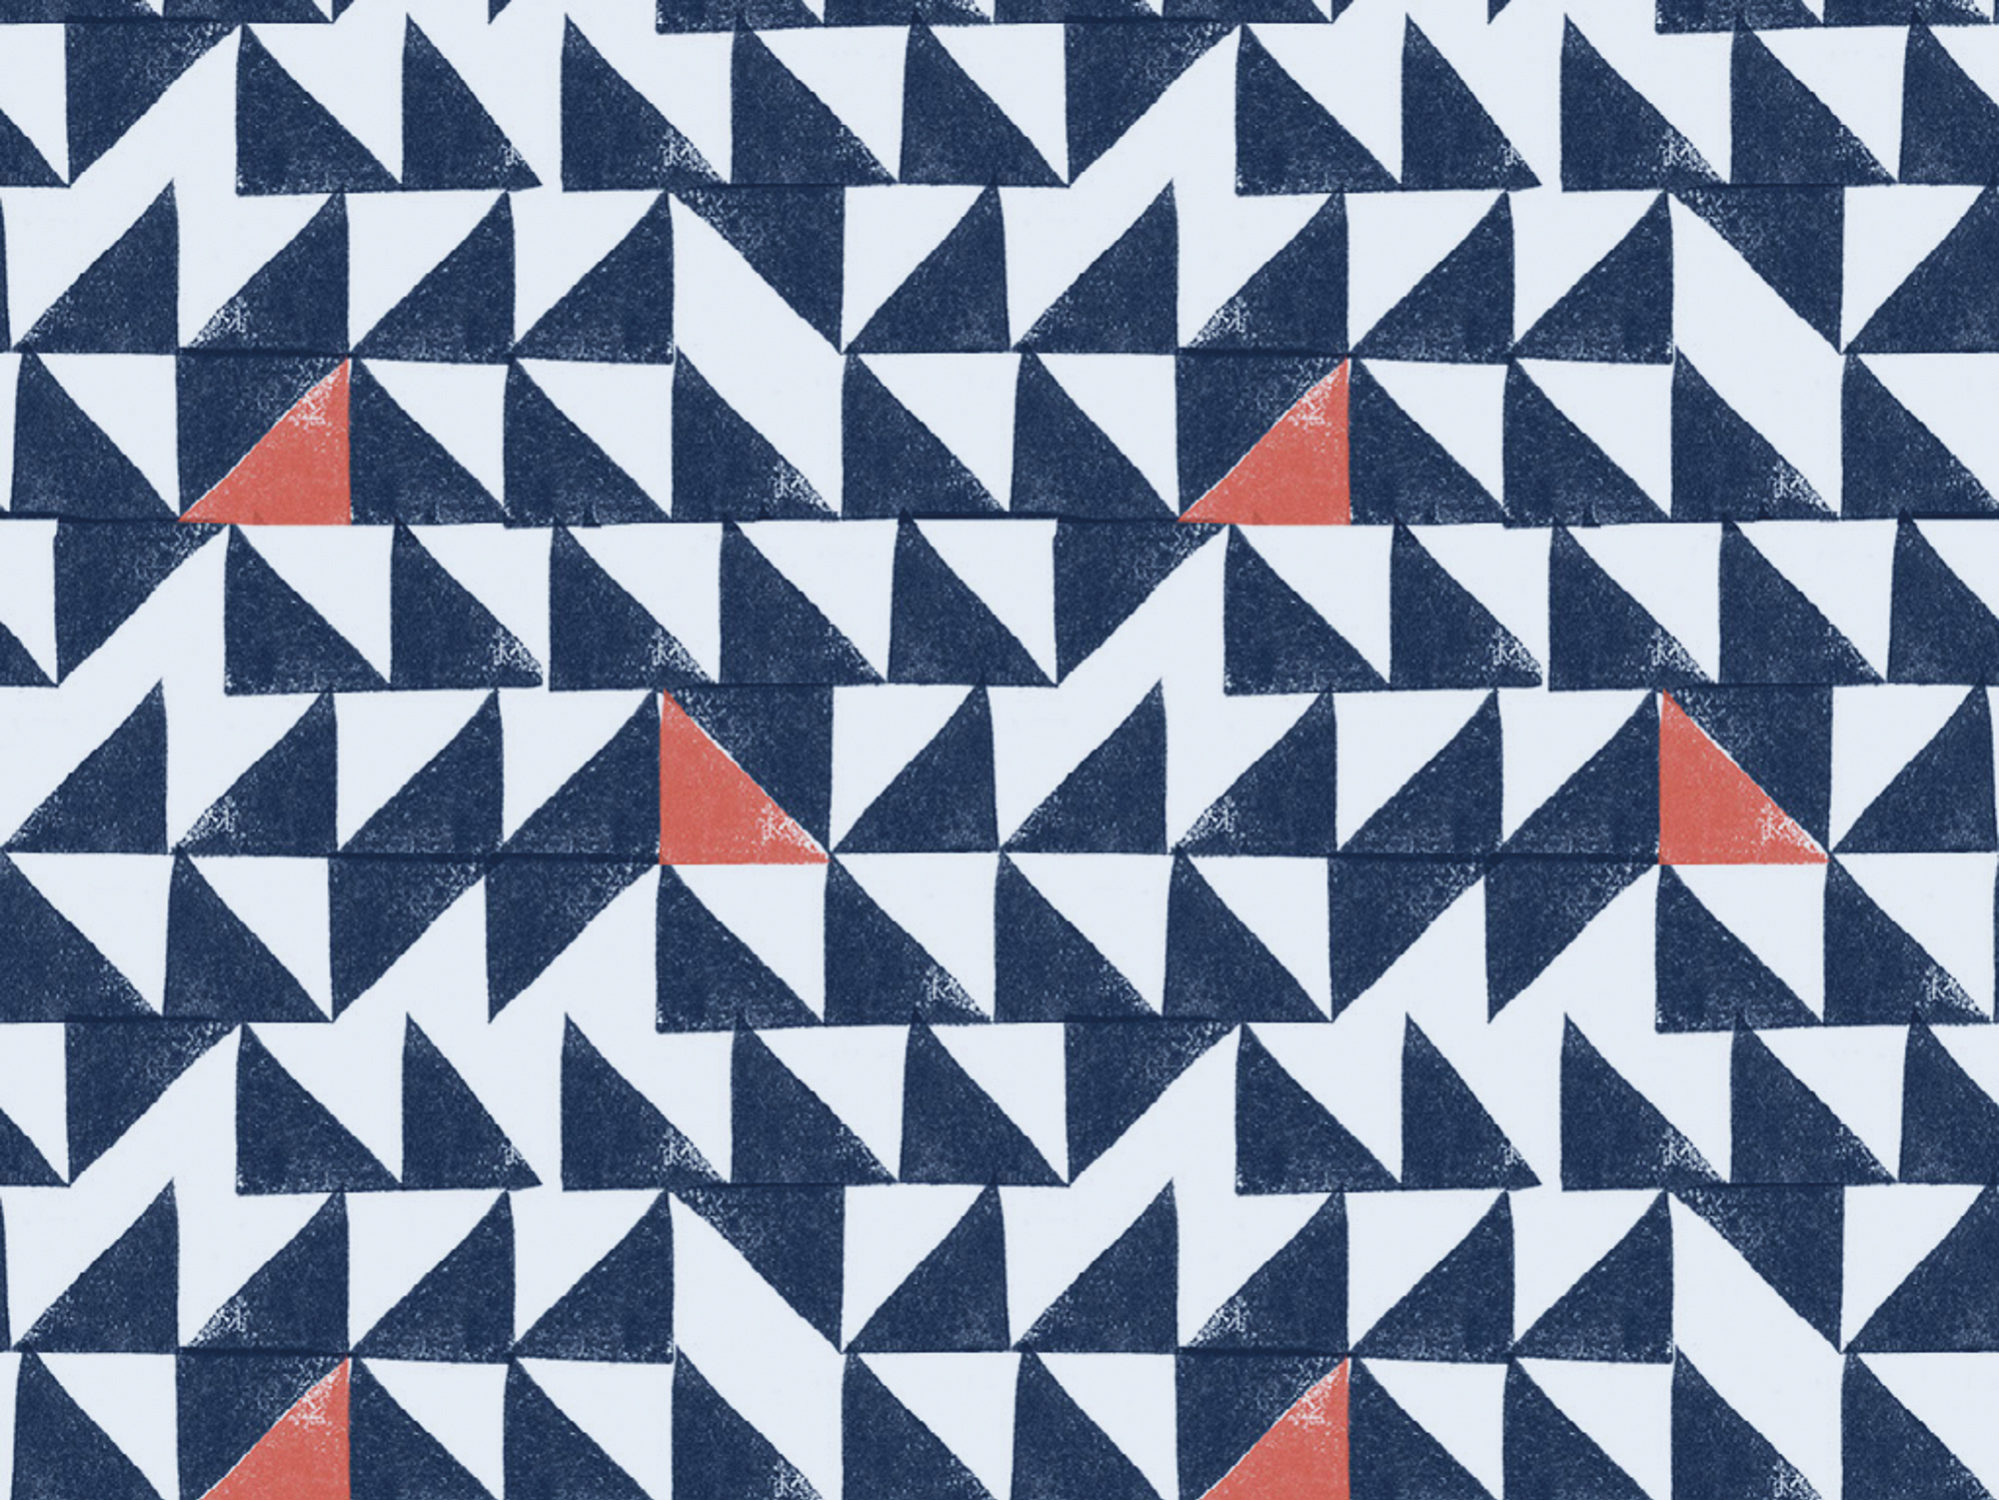 AmyAna Cover art, white, dark blue, and red-orange triangles in a random pattern.